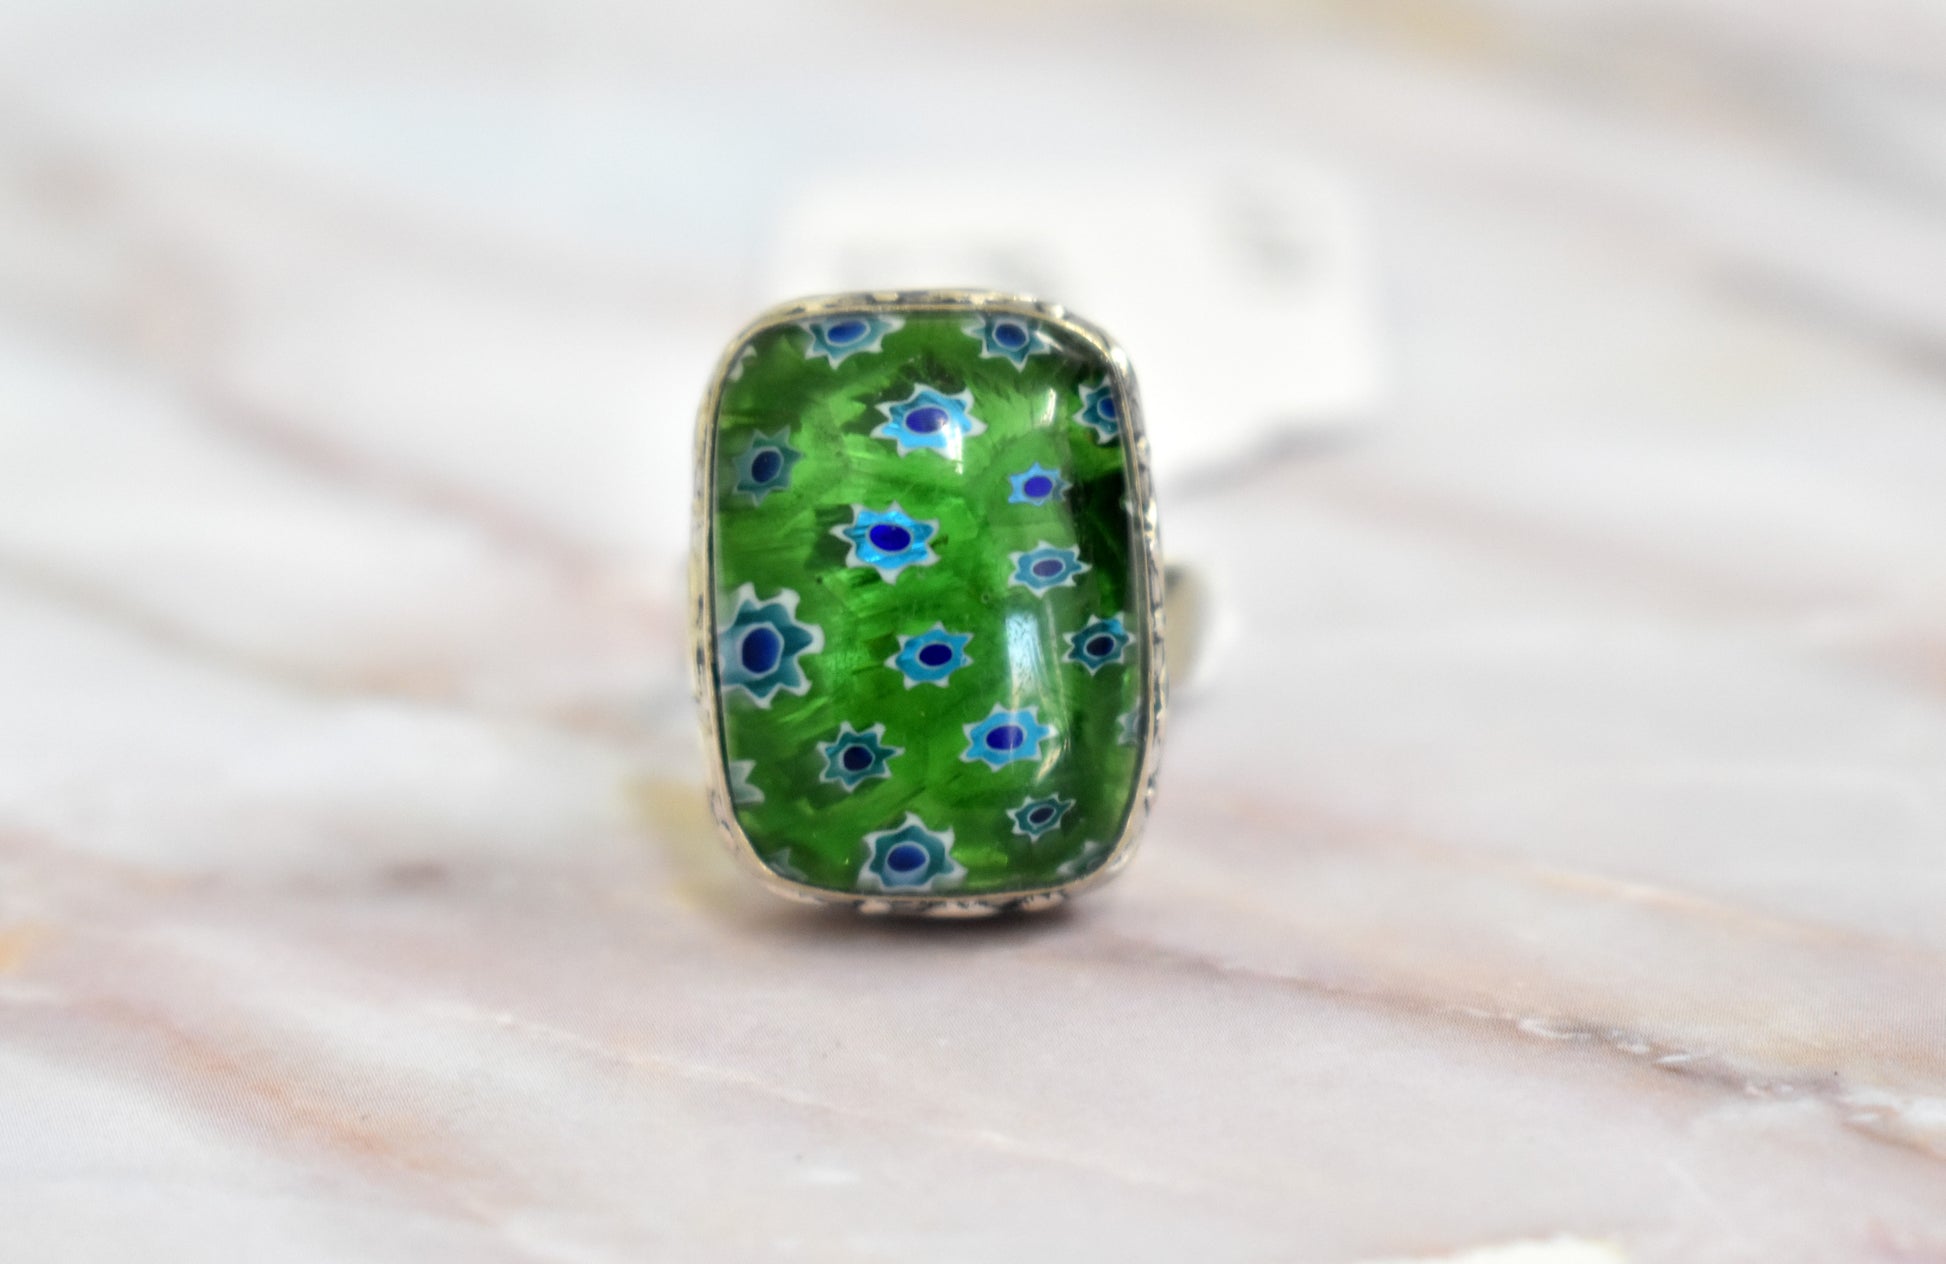 stones-of-transformation - Murano Glass Ring (Size 8) - Stones of Transformation - 